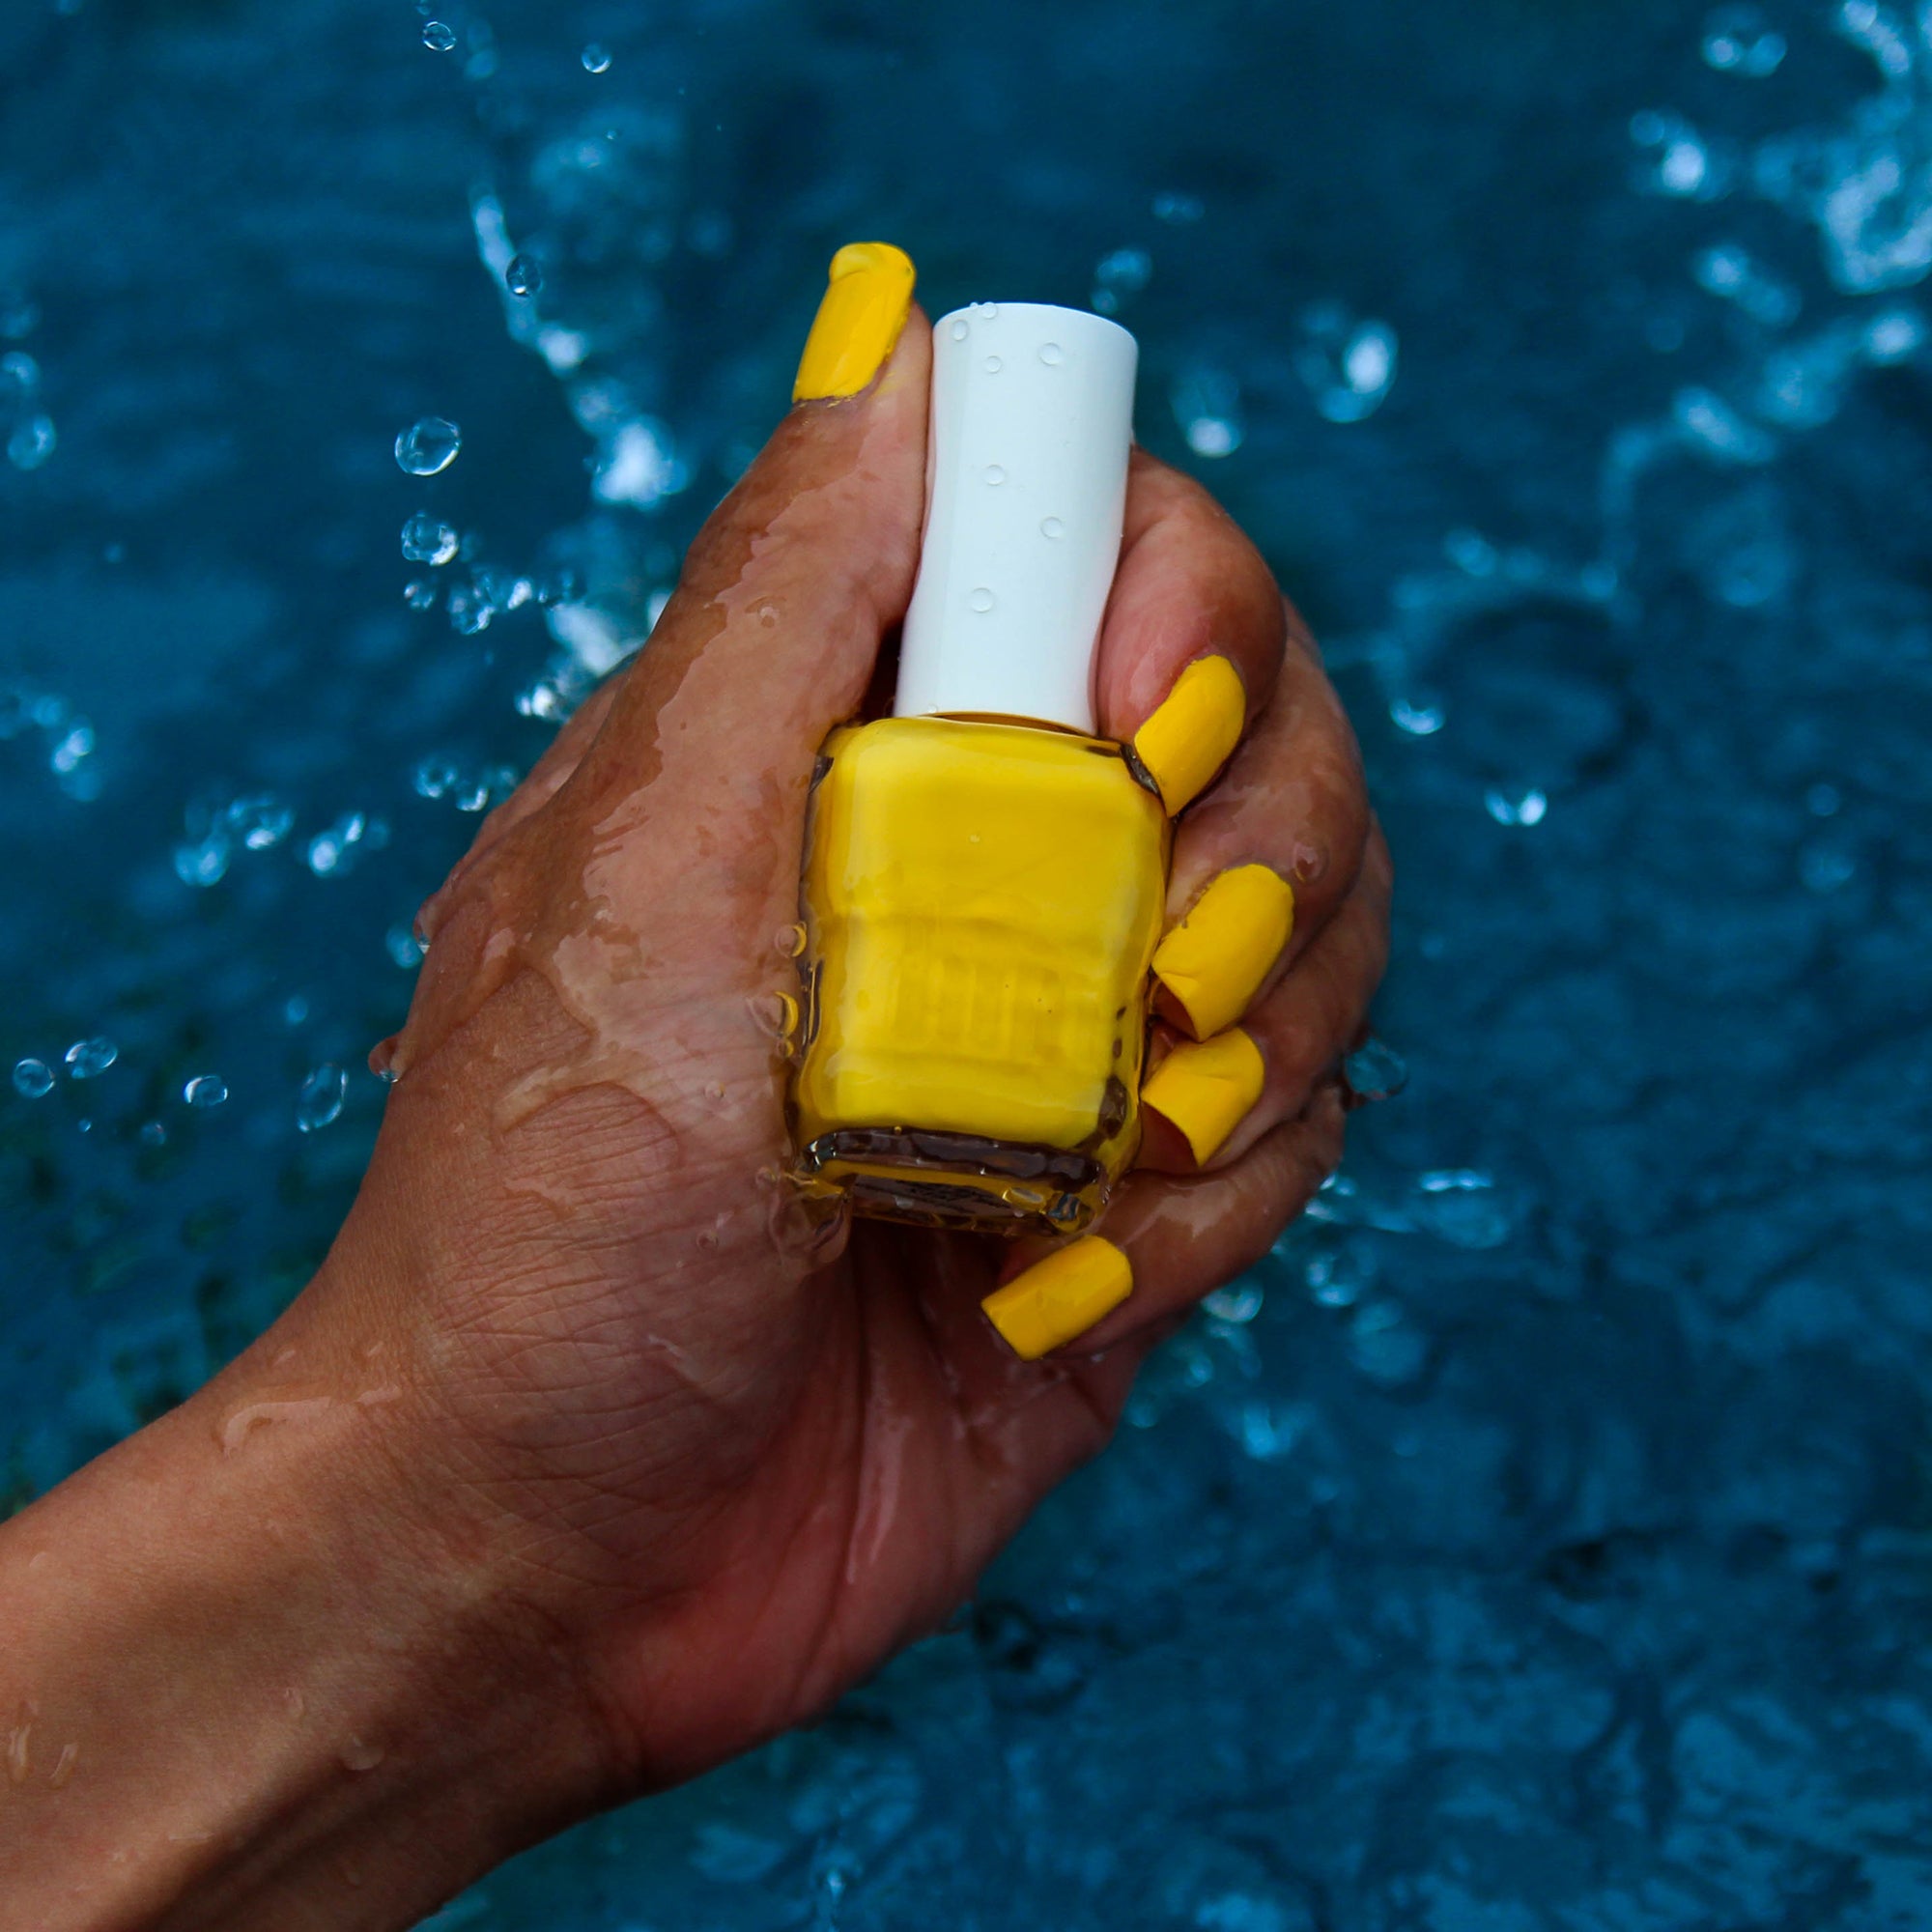 duri cosmetics yellow nail polish color. Beach aesthetic. cruelty free. toxin free nail varnish.